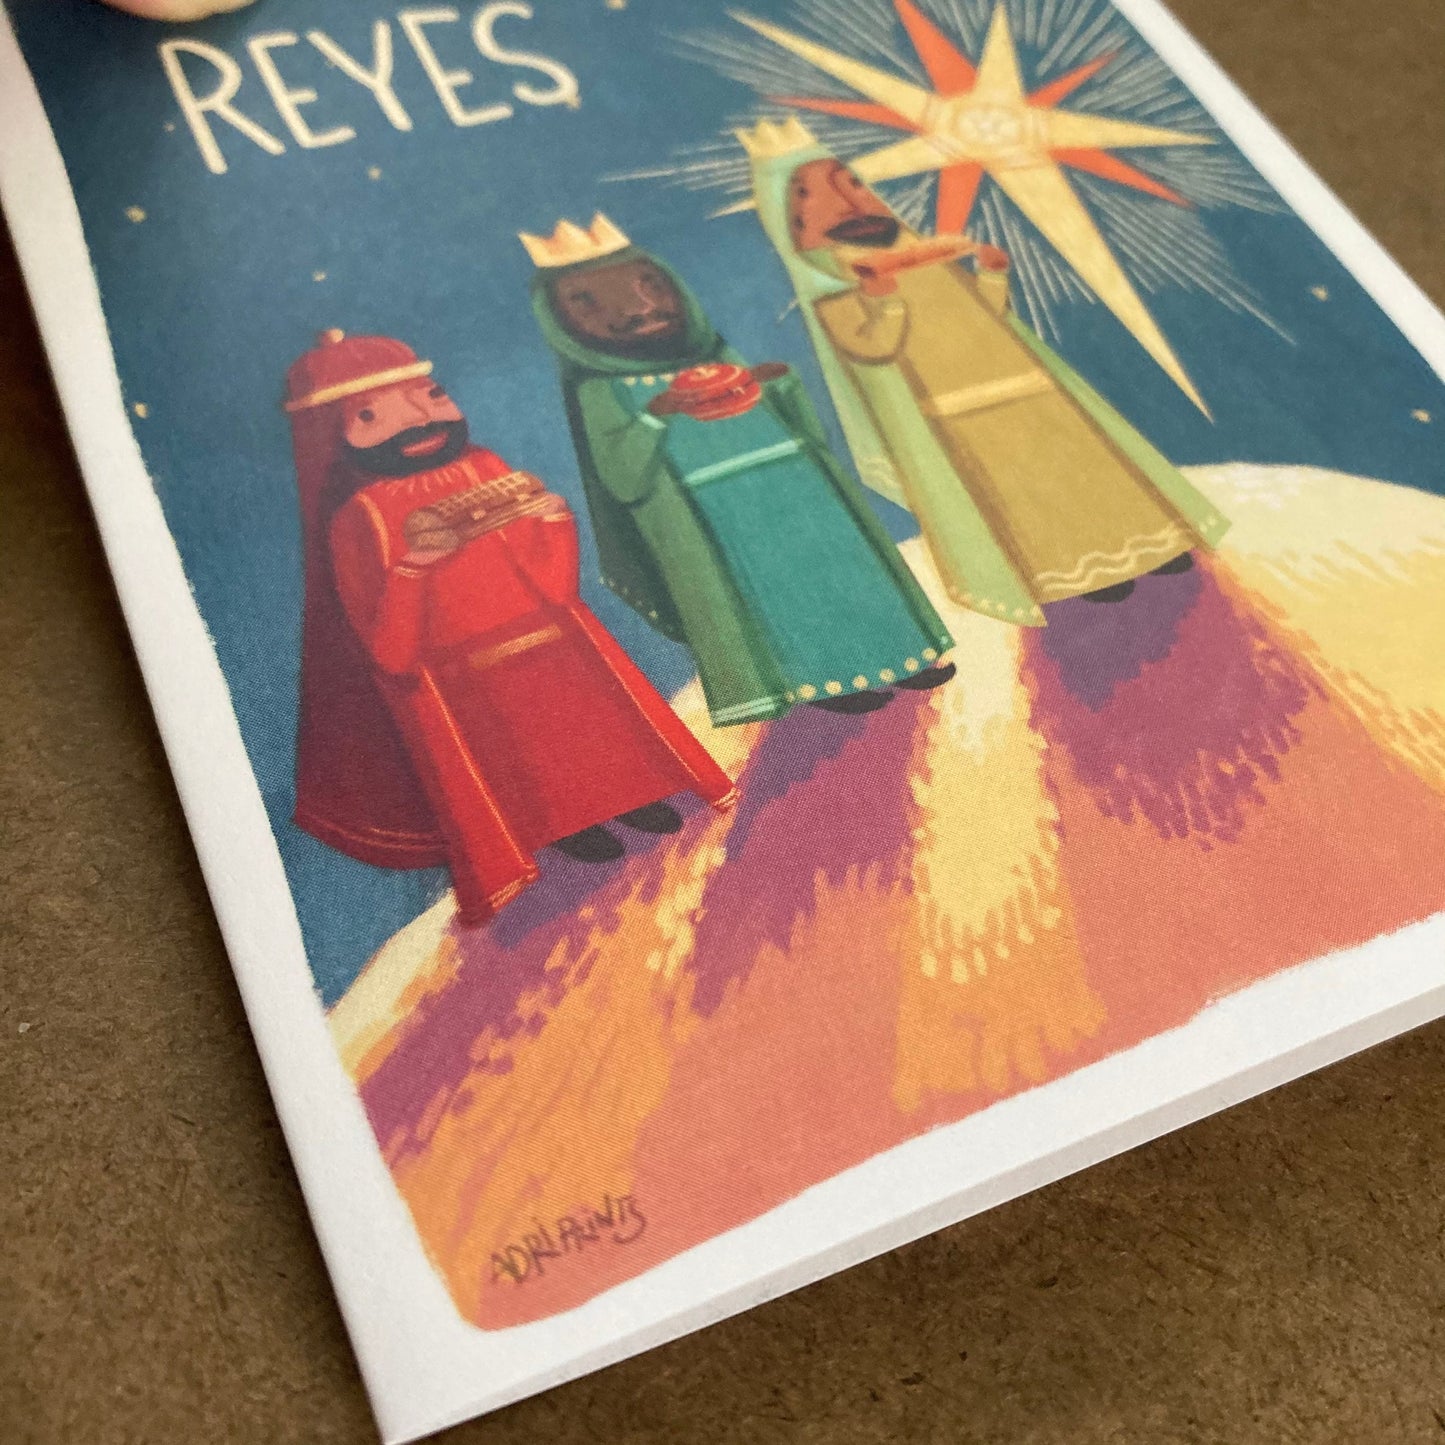 HOLIDAY - Reyes Magos eco-friendly greetings, boxed card set, art by Adriana Bergstrom